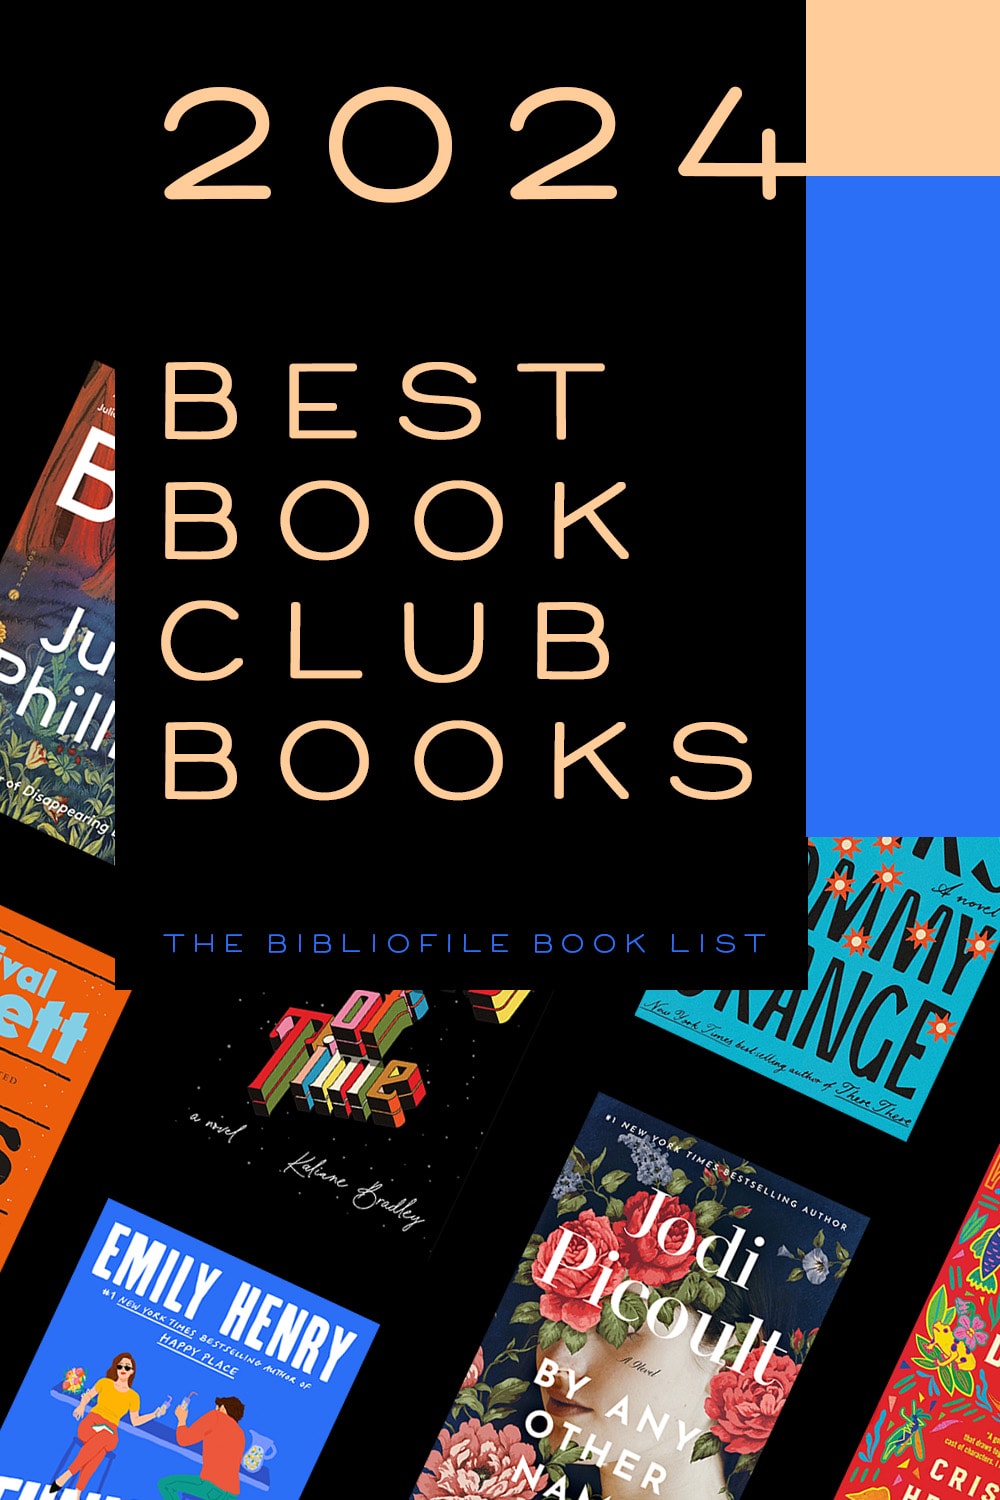 2024 best book club books new release anticipated book list